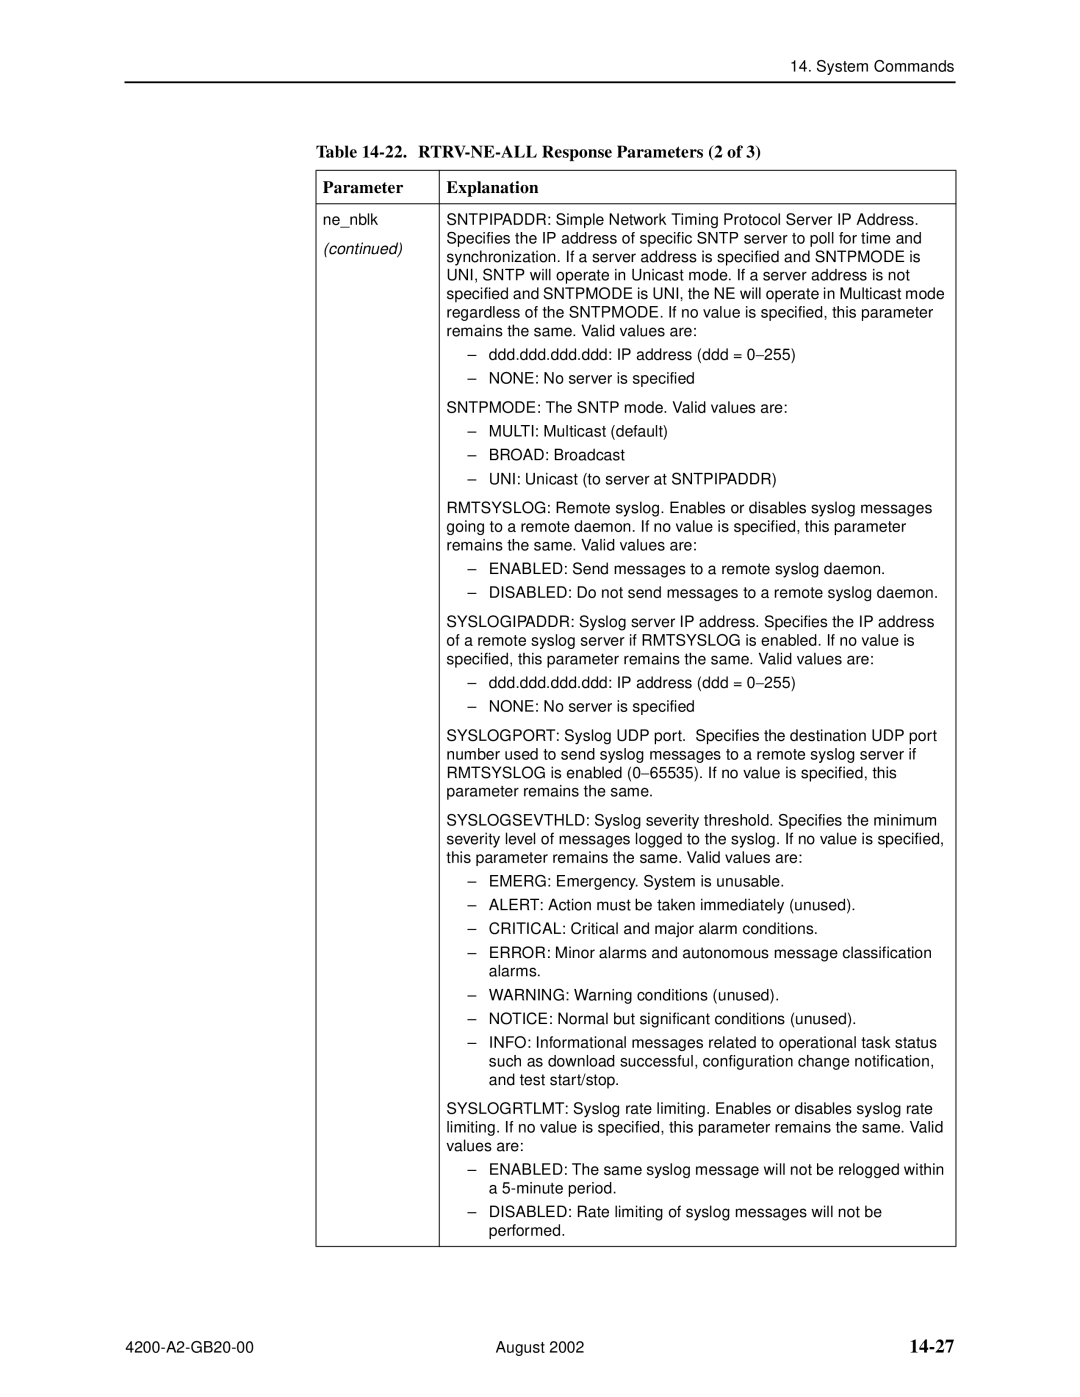 Paradyne 4200 manual 14-27, 22. RTRV-NE-ALL Response Parameters 2 of, Explanation 